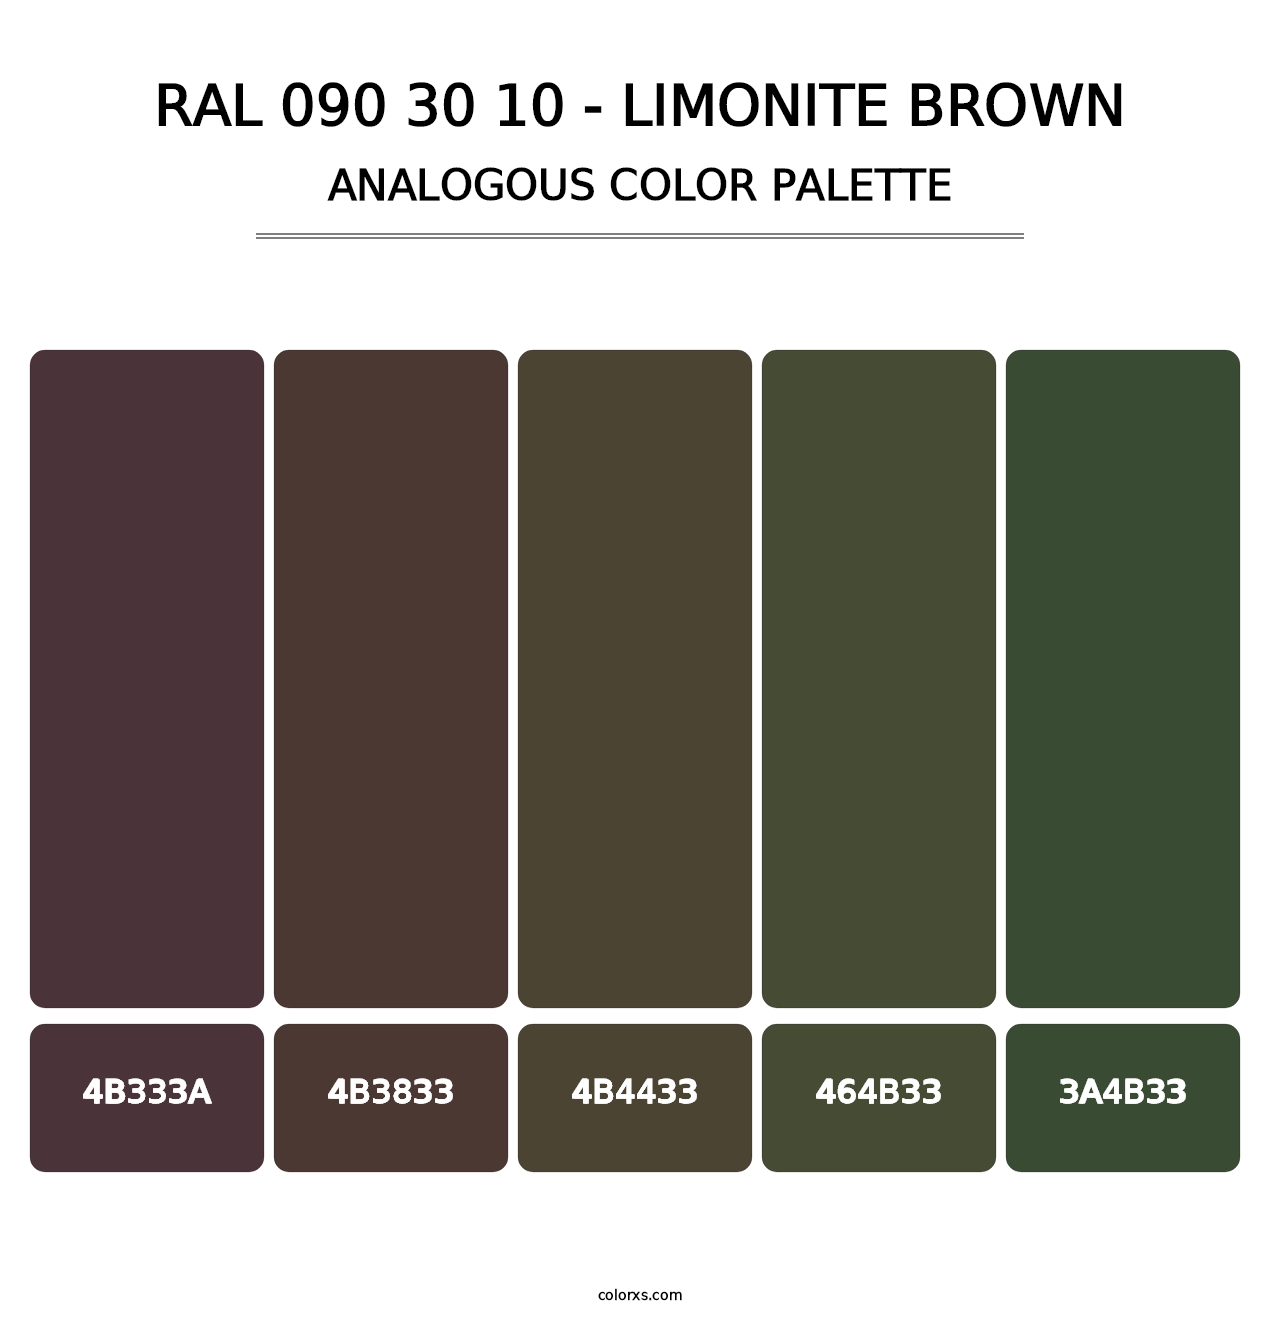 RAL 090 30 10 - Limonite Brown - Analogous Color Palette